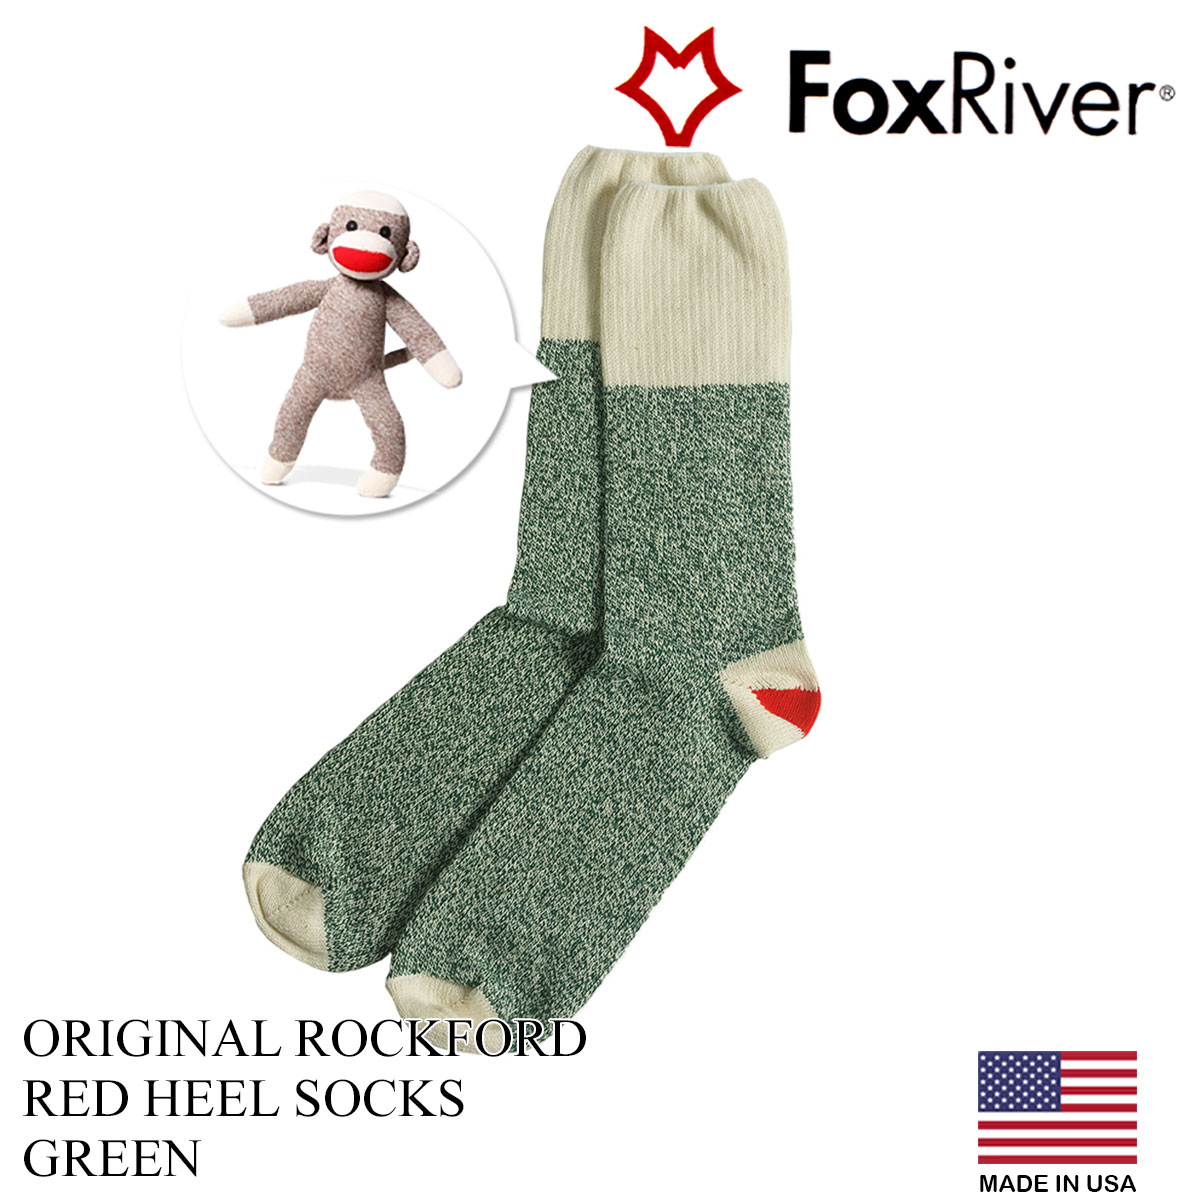 red heel socks